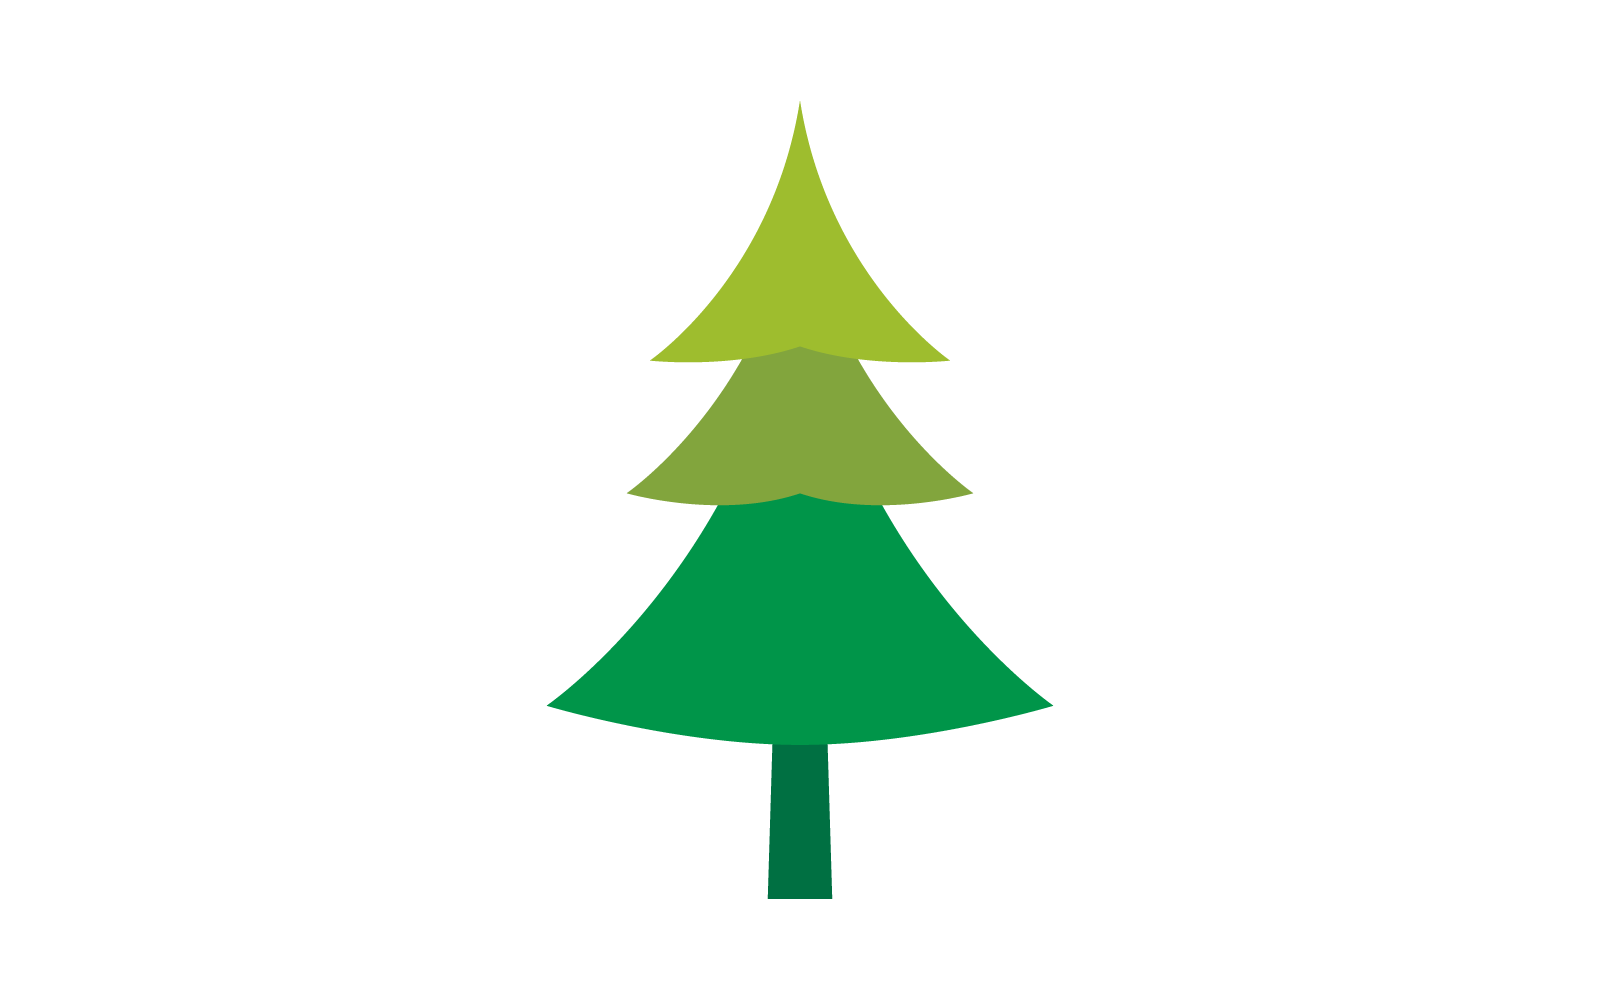 Pine tree logo illustration vector design template